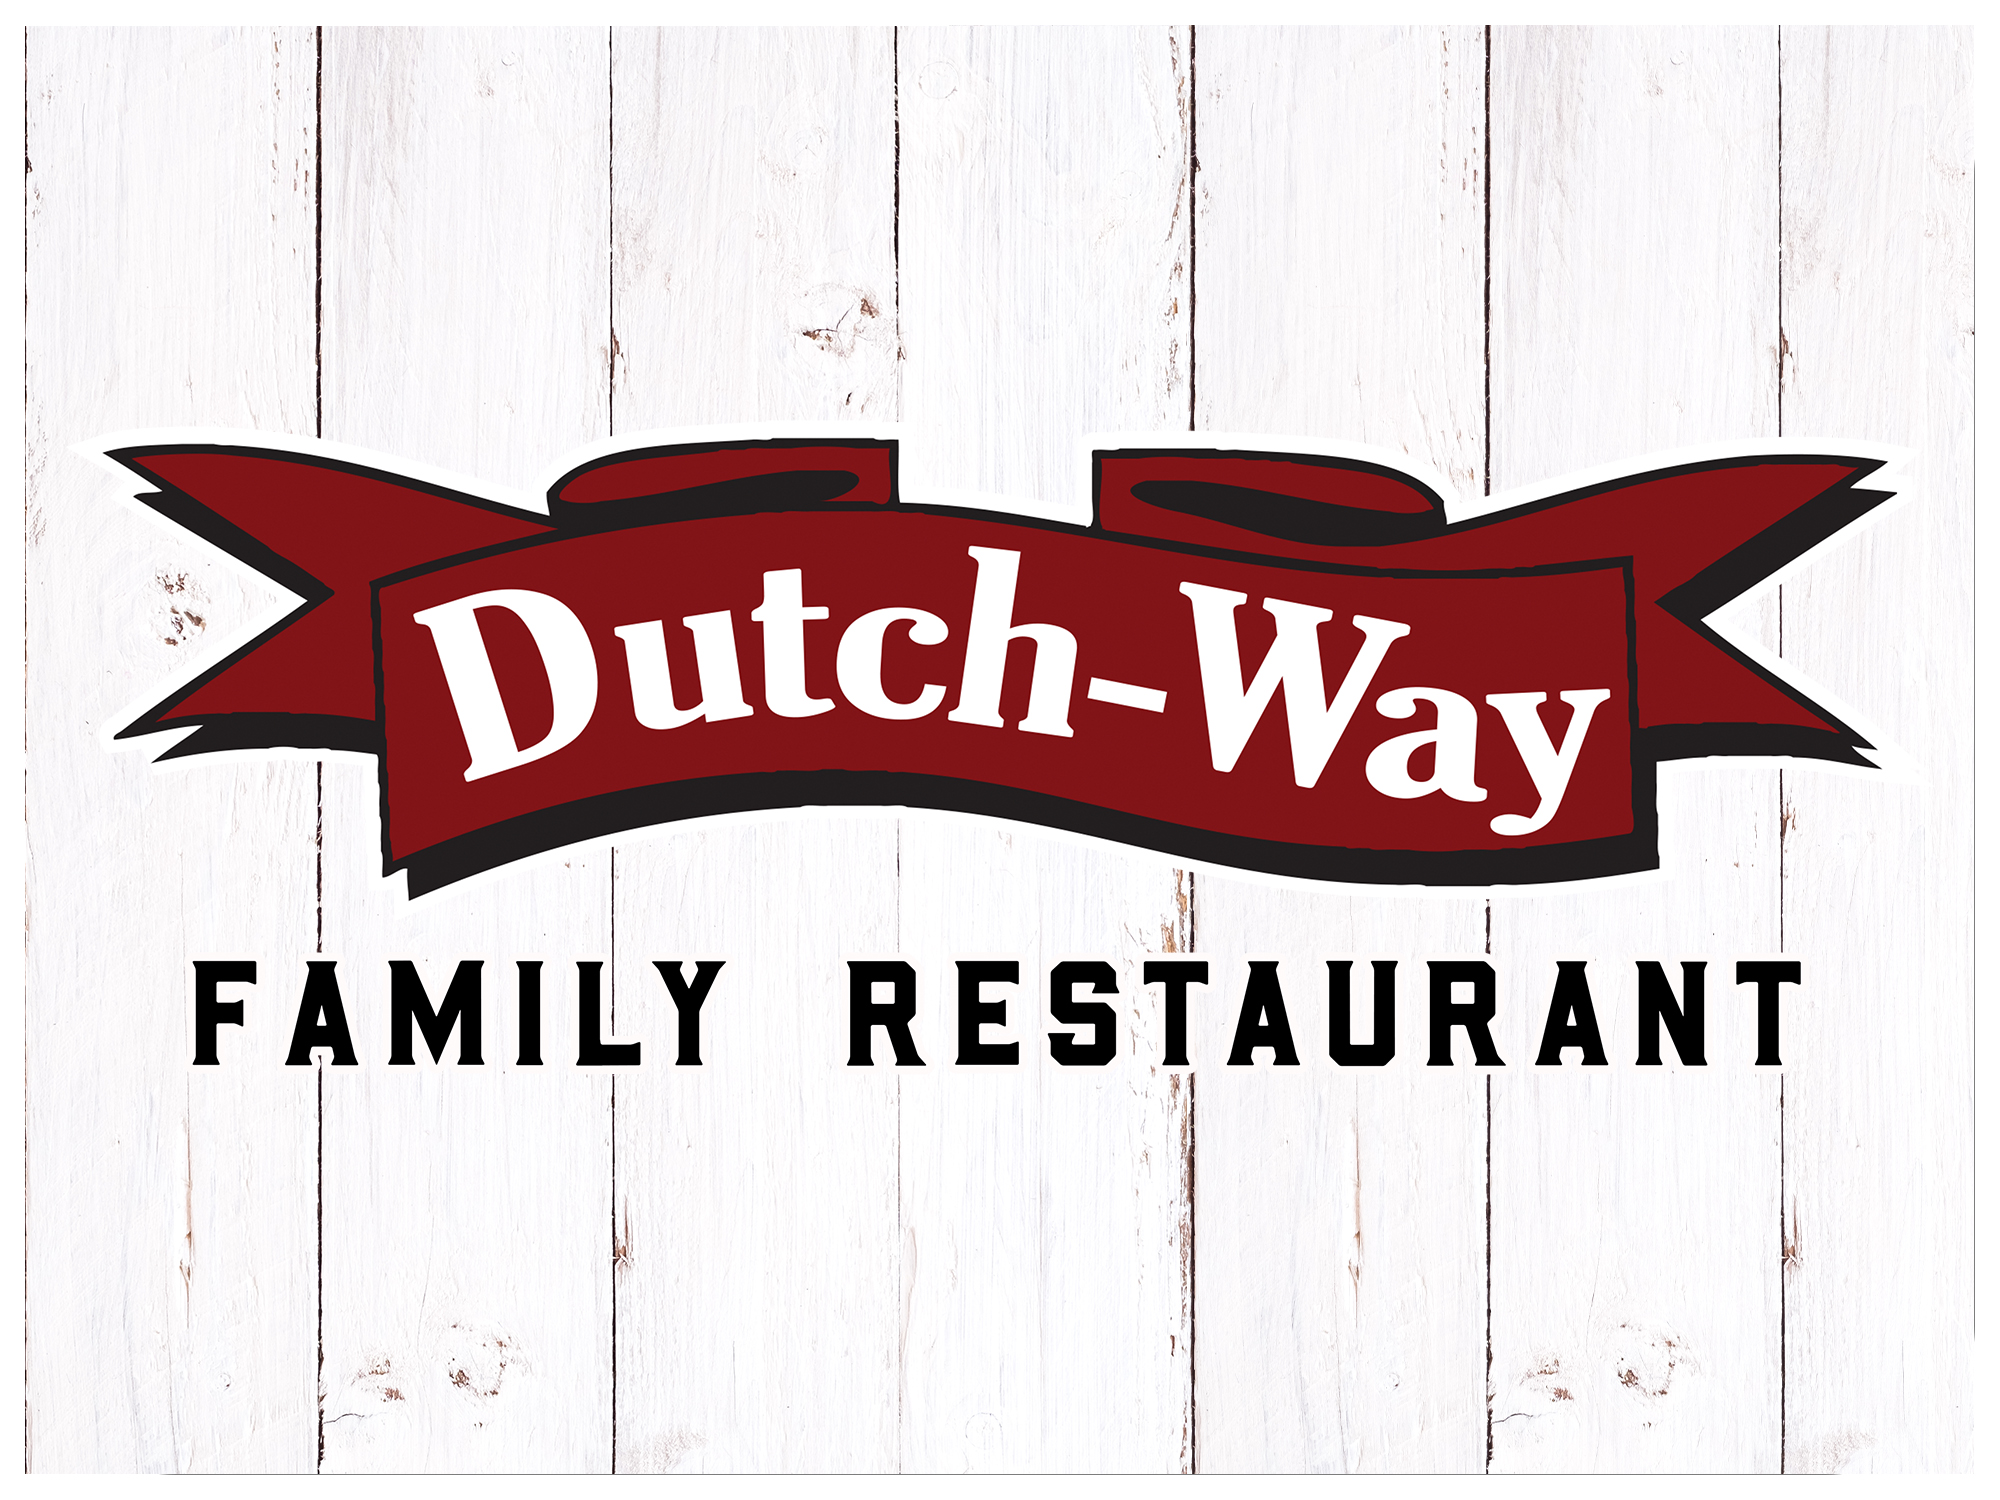 Dutch-Way Family Restaurants